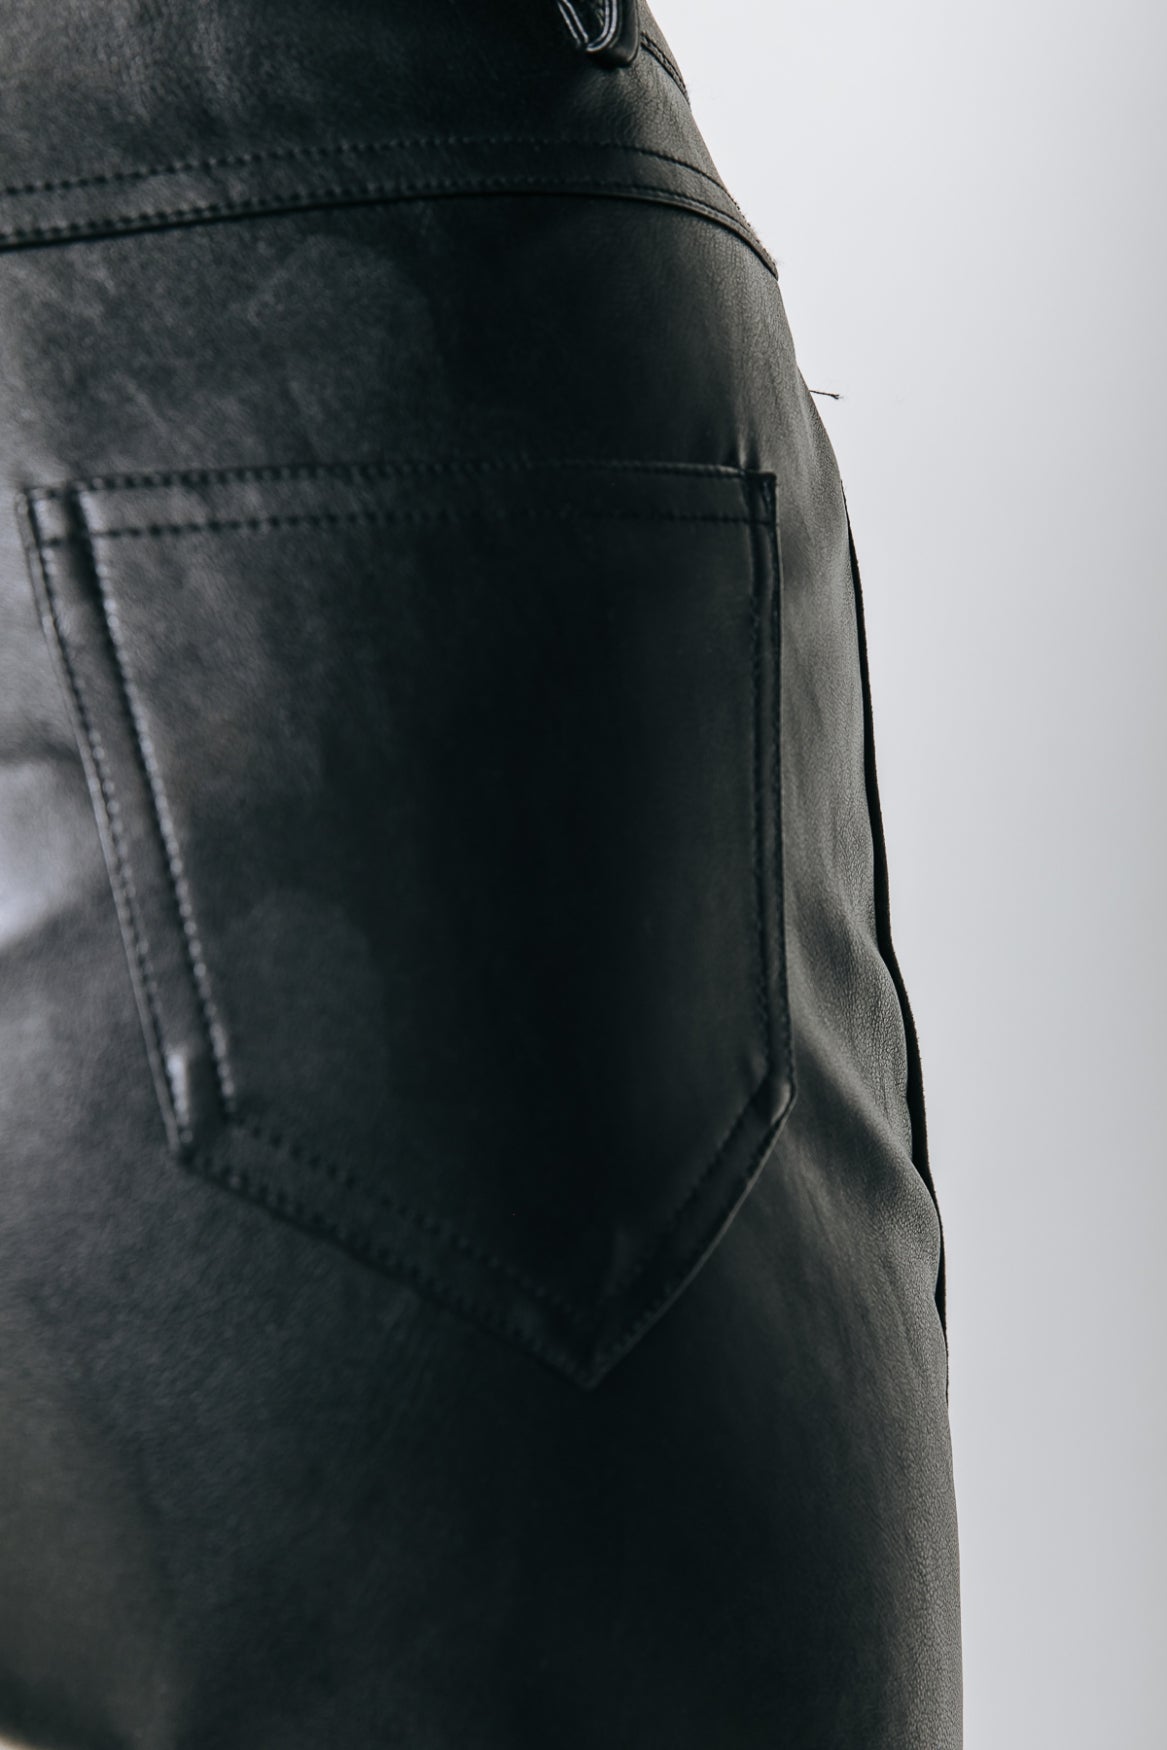 Colourful Rebel Chloe Studs Vegan Leather Five Pocket Pants | Black 